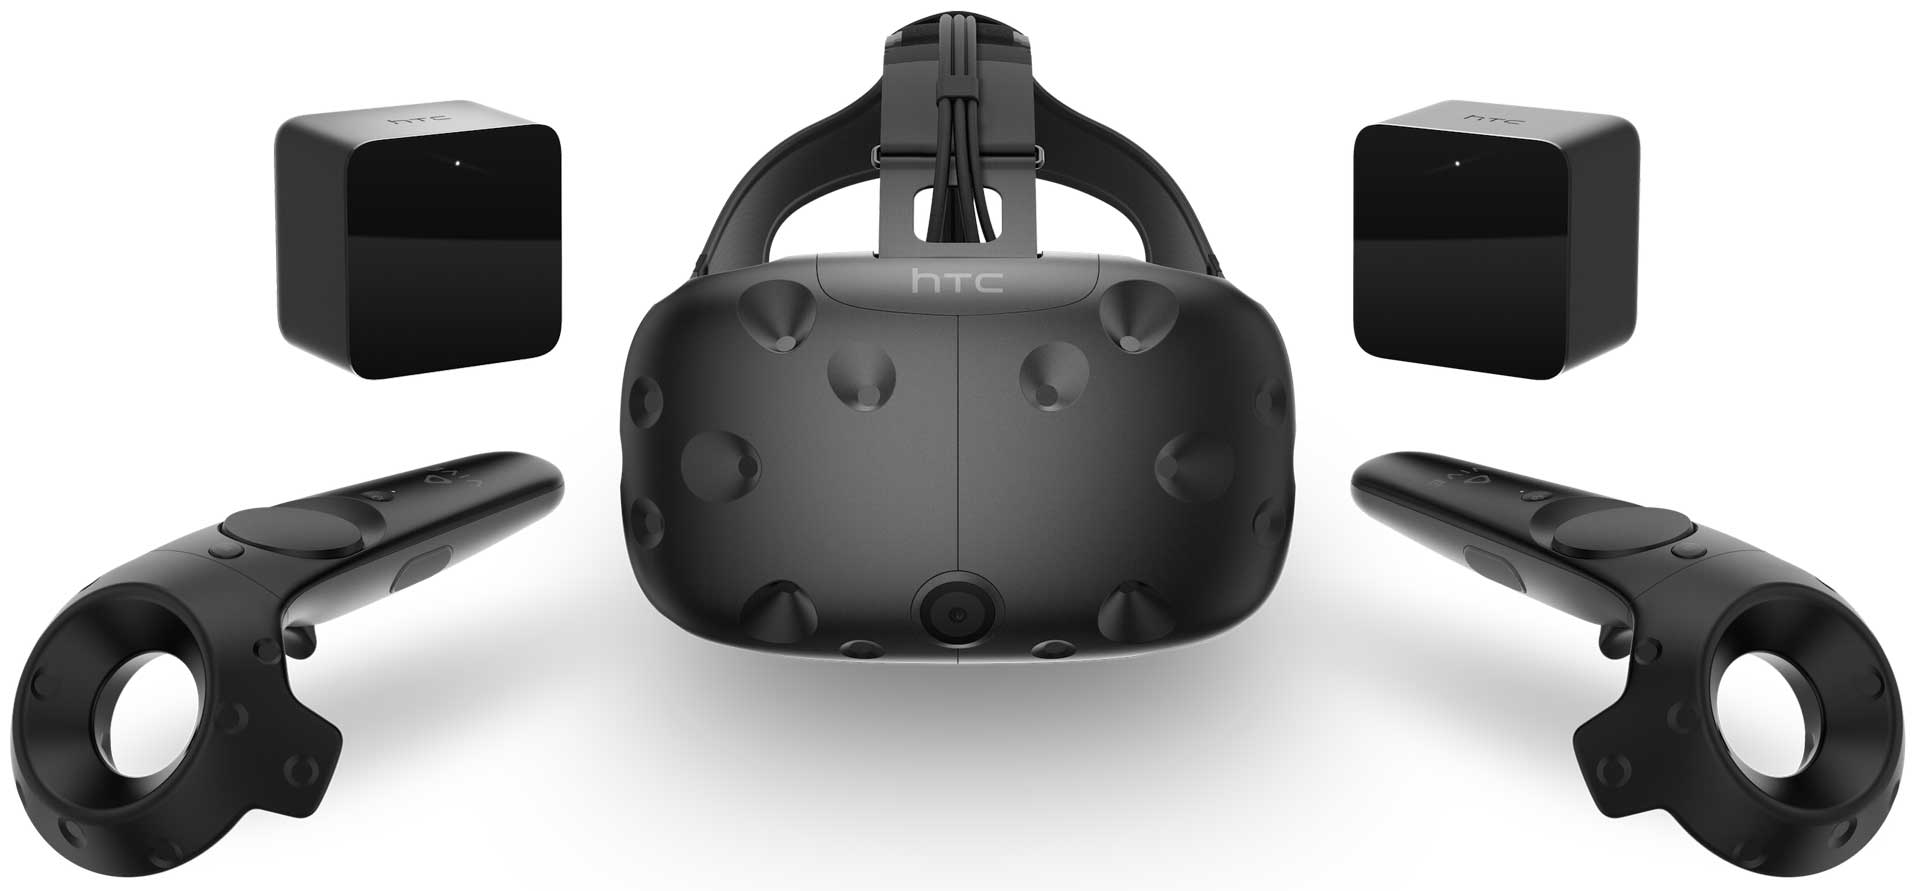 Steam VR: Vive headset priced at $800 | VG247